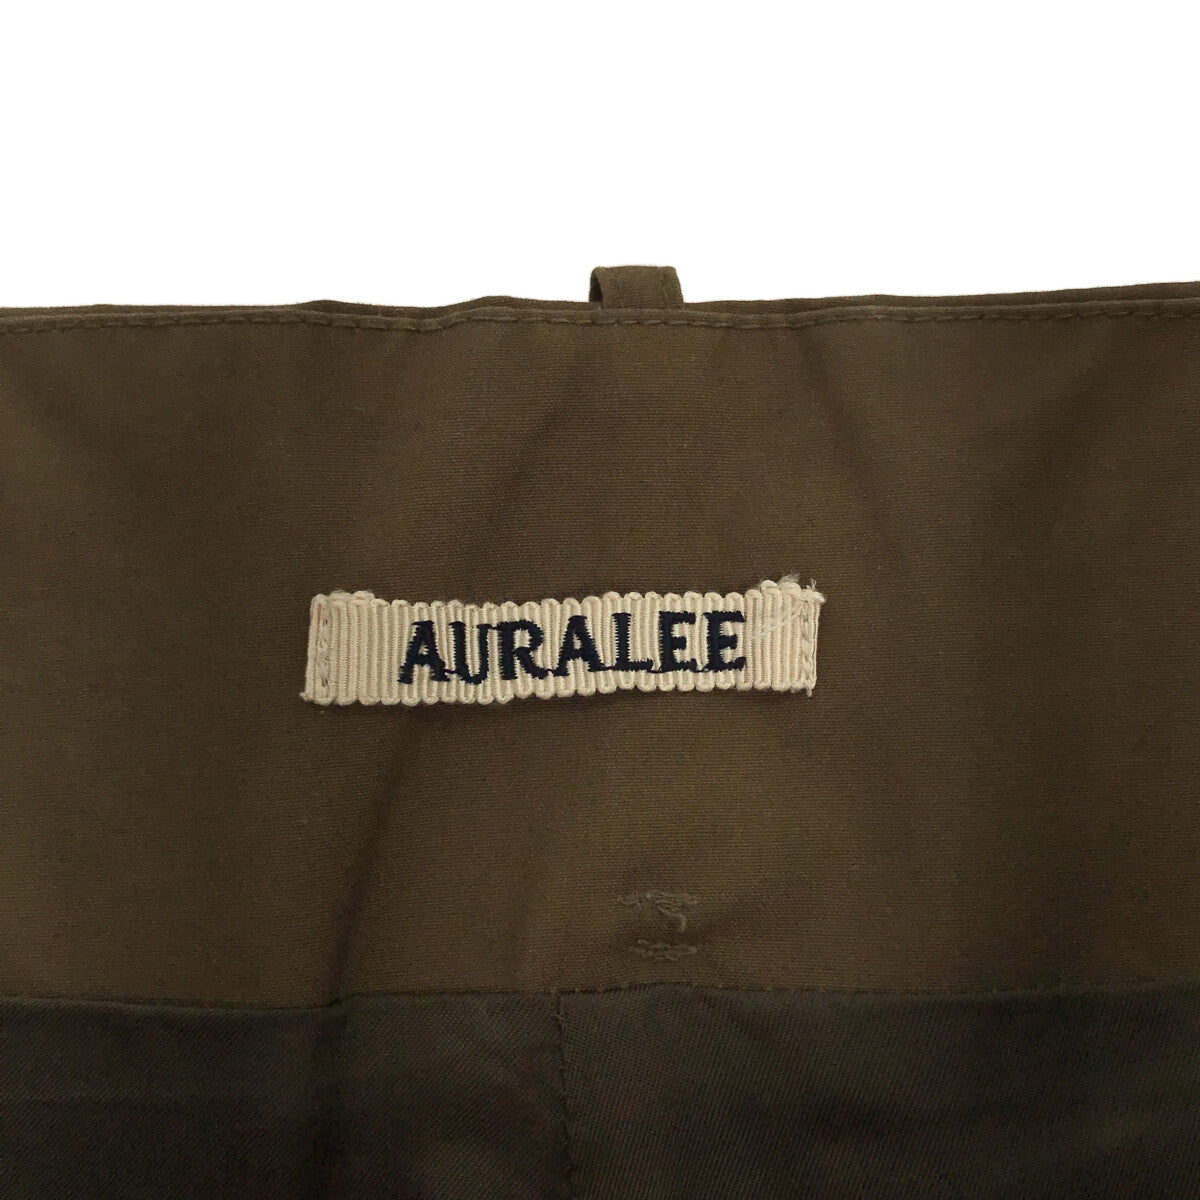 AURALEE / オーラリー | HIGH COUNT CLOTH WIDE PANTS / ハイカウントクロス タック ワイドパンツ | 3 |  カーキ系 | メンズ